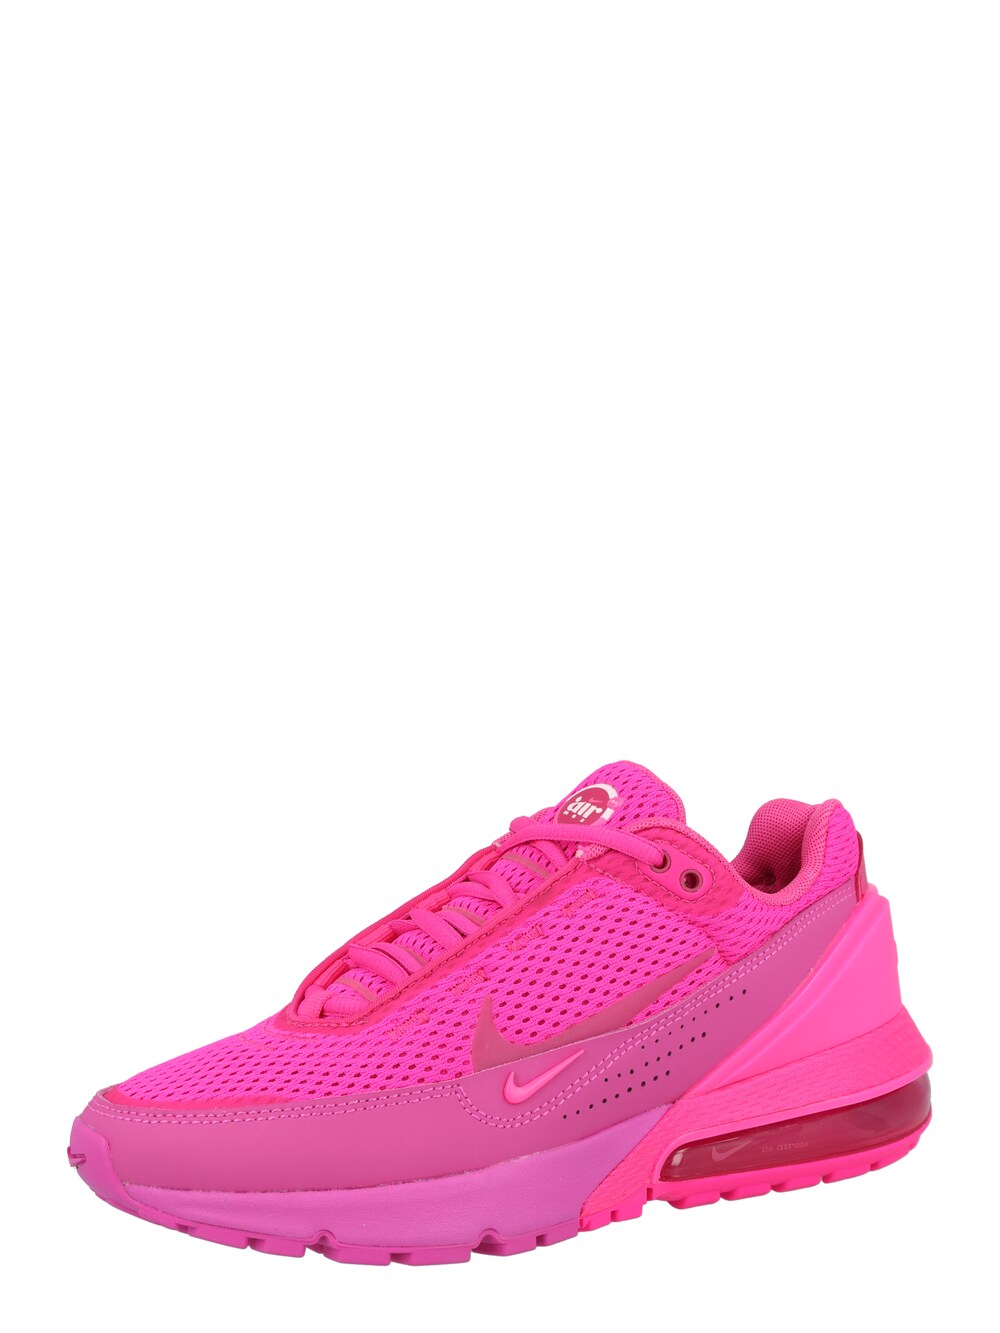 Кроссовки Nike Sportswear Air Max Pulse, розовый/фуксия спортивная сумка nike лазерная фуксия лазерная фуксия средне мягко розовый